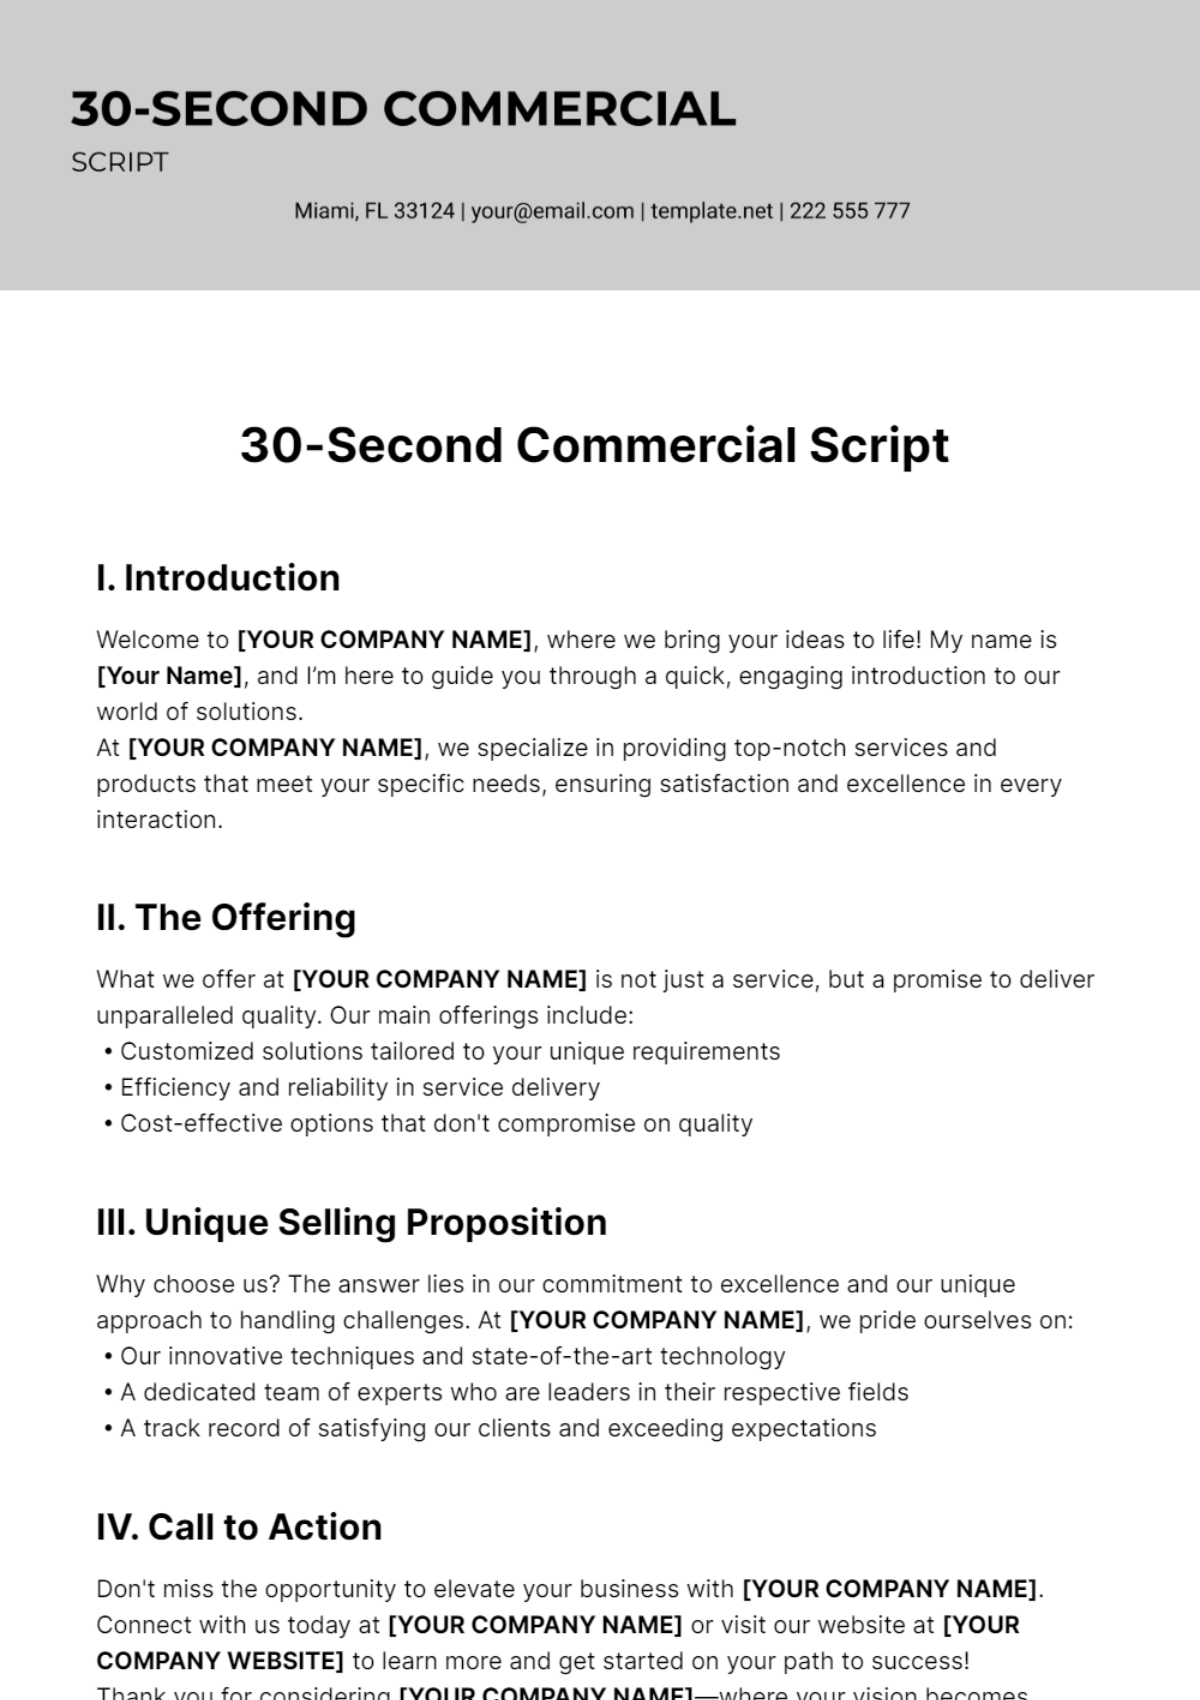 30-Second Commercial Script Template